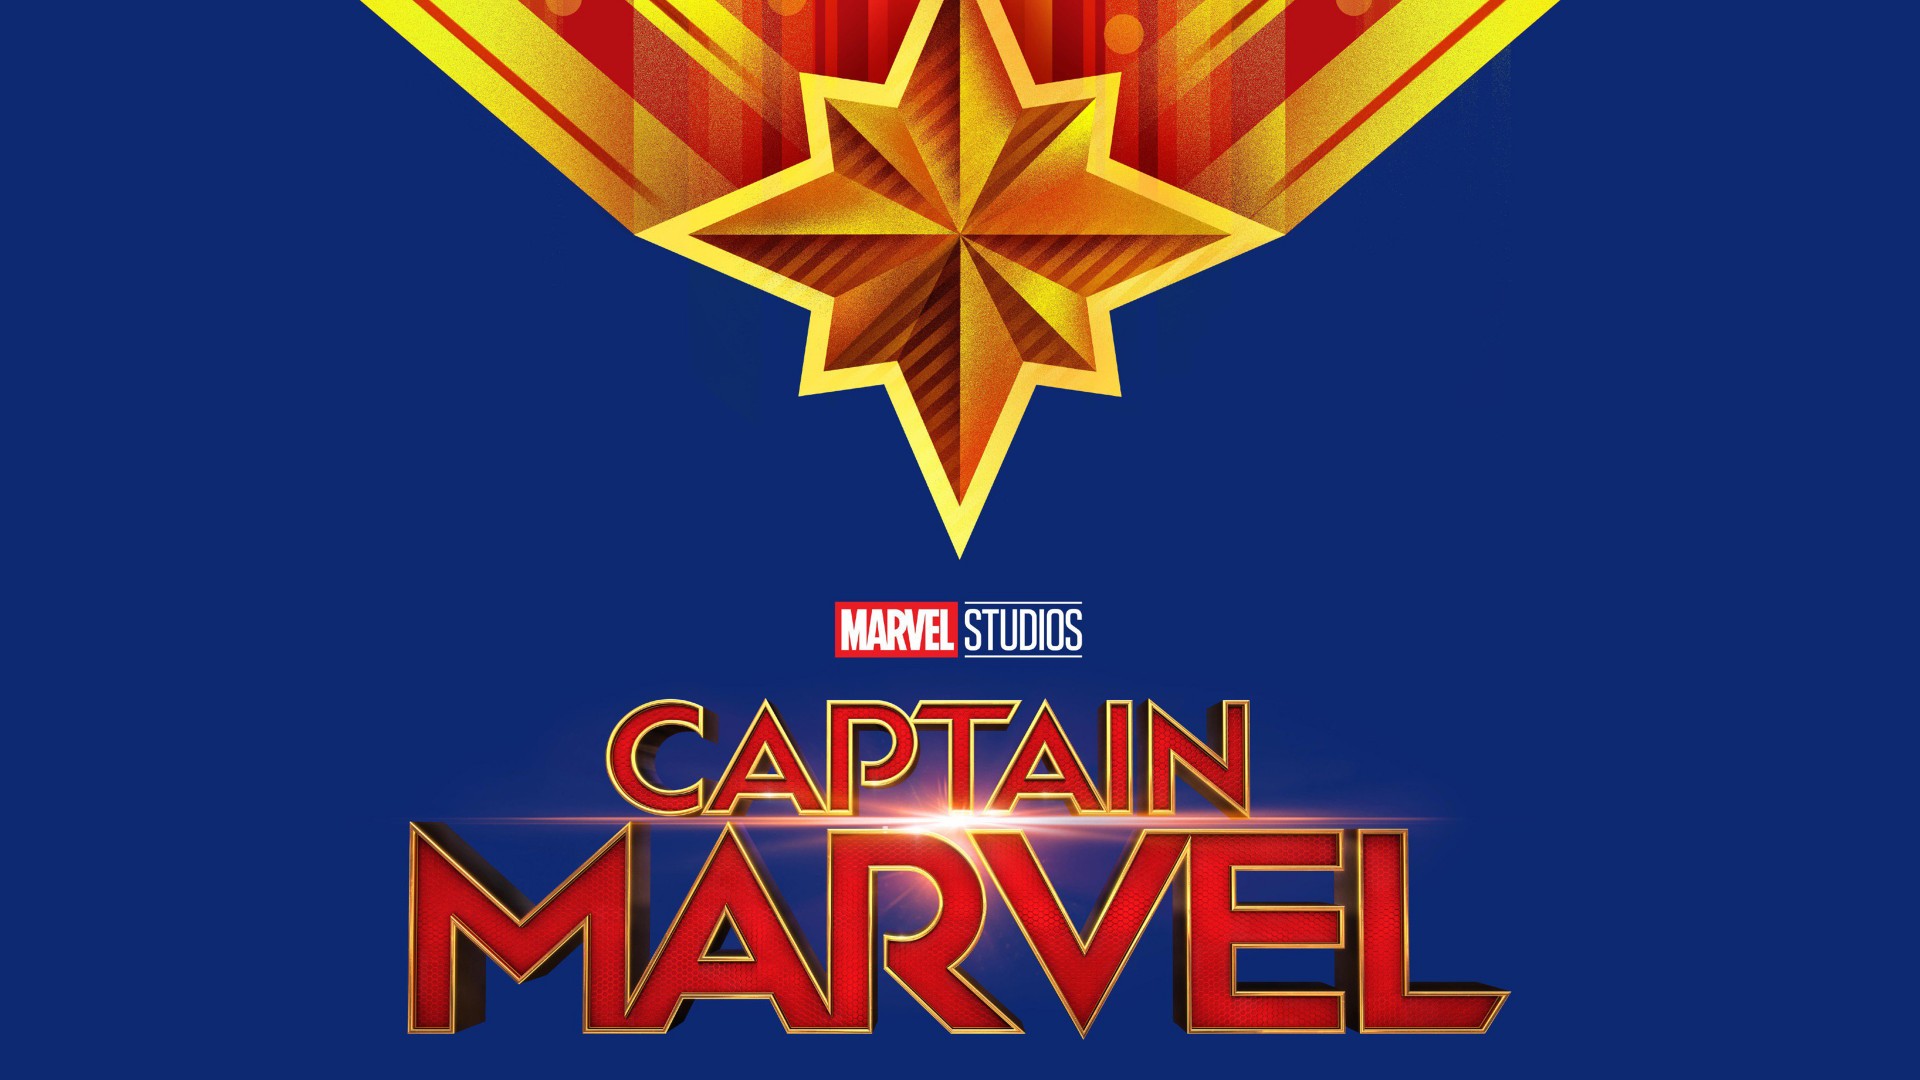 Marvel Studios Captain Marvel Movie Logo - Captain Marvel Logo Png - HD Wallpaper 